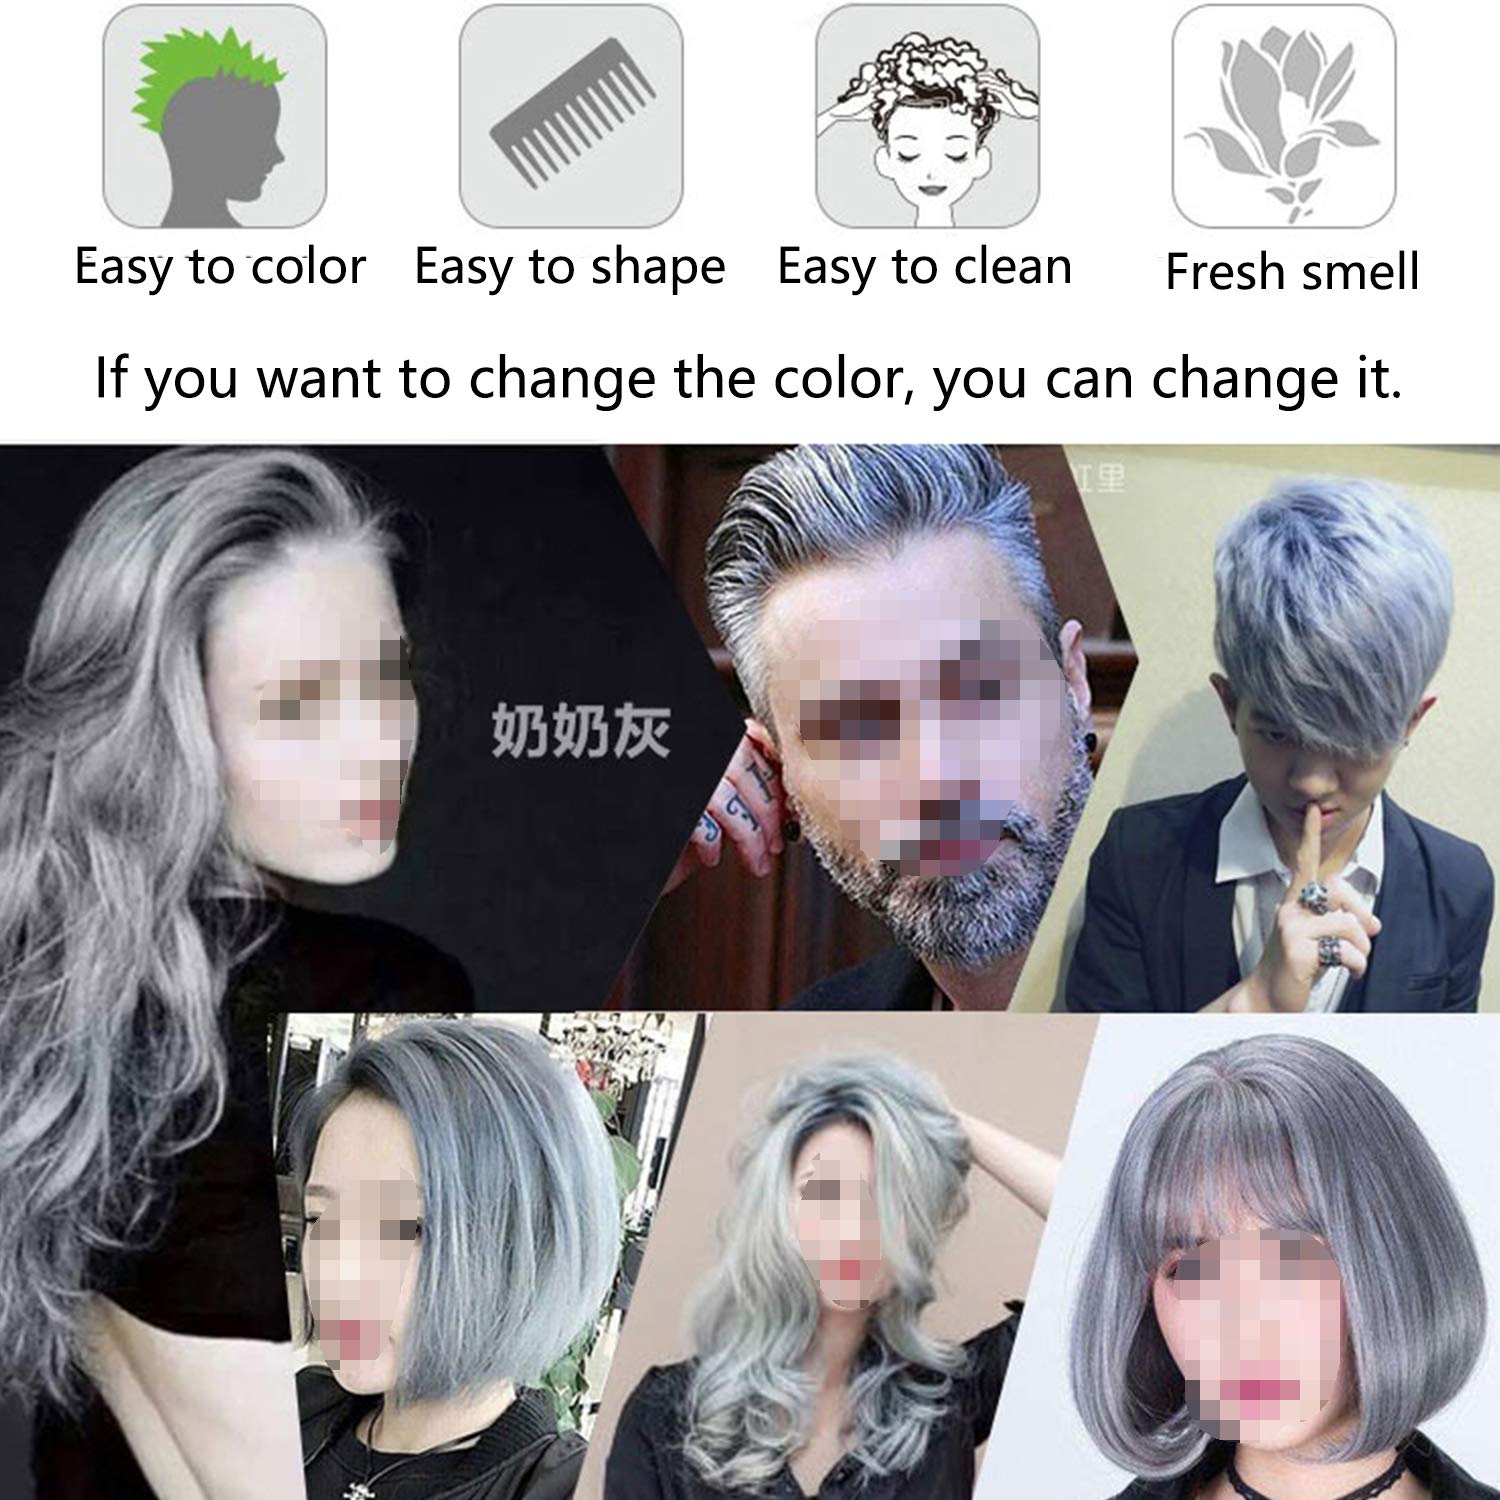 Mofajang Hair Wax Color Styling Cream Mud, Natural Hairstyle Color Pomade, Washable Temporary (Gray)